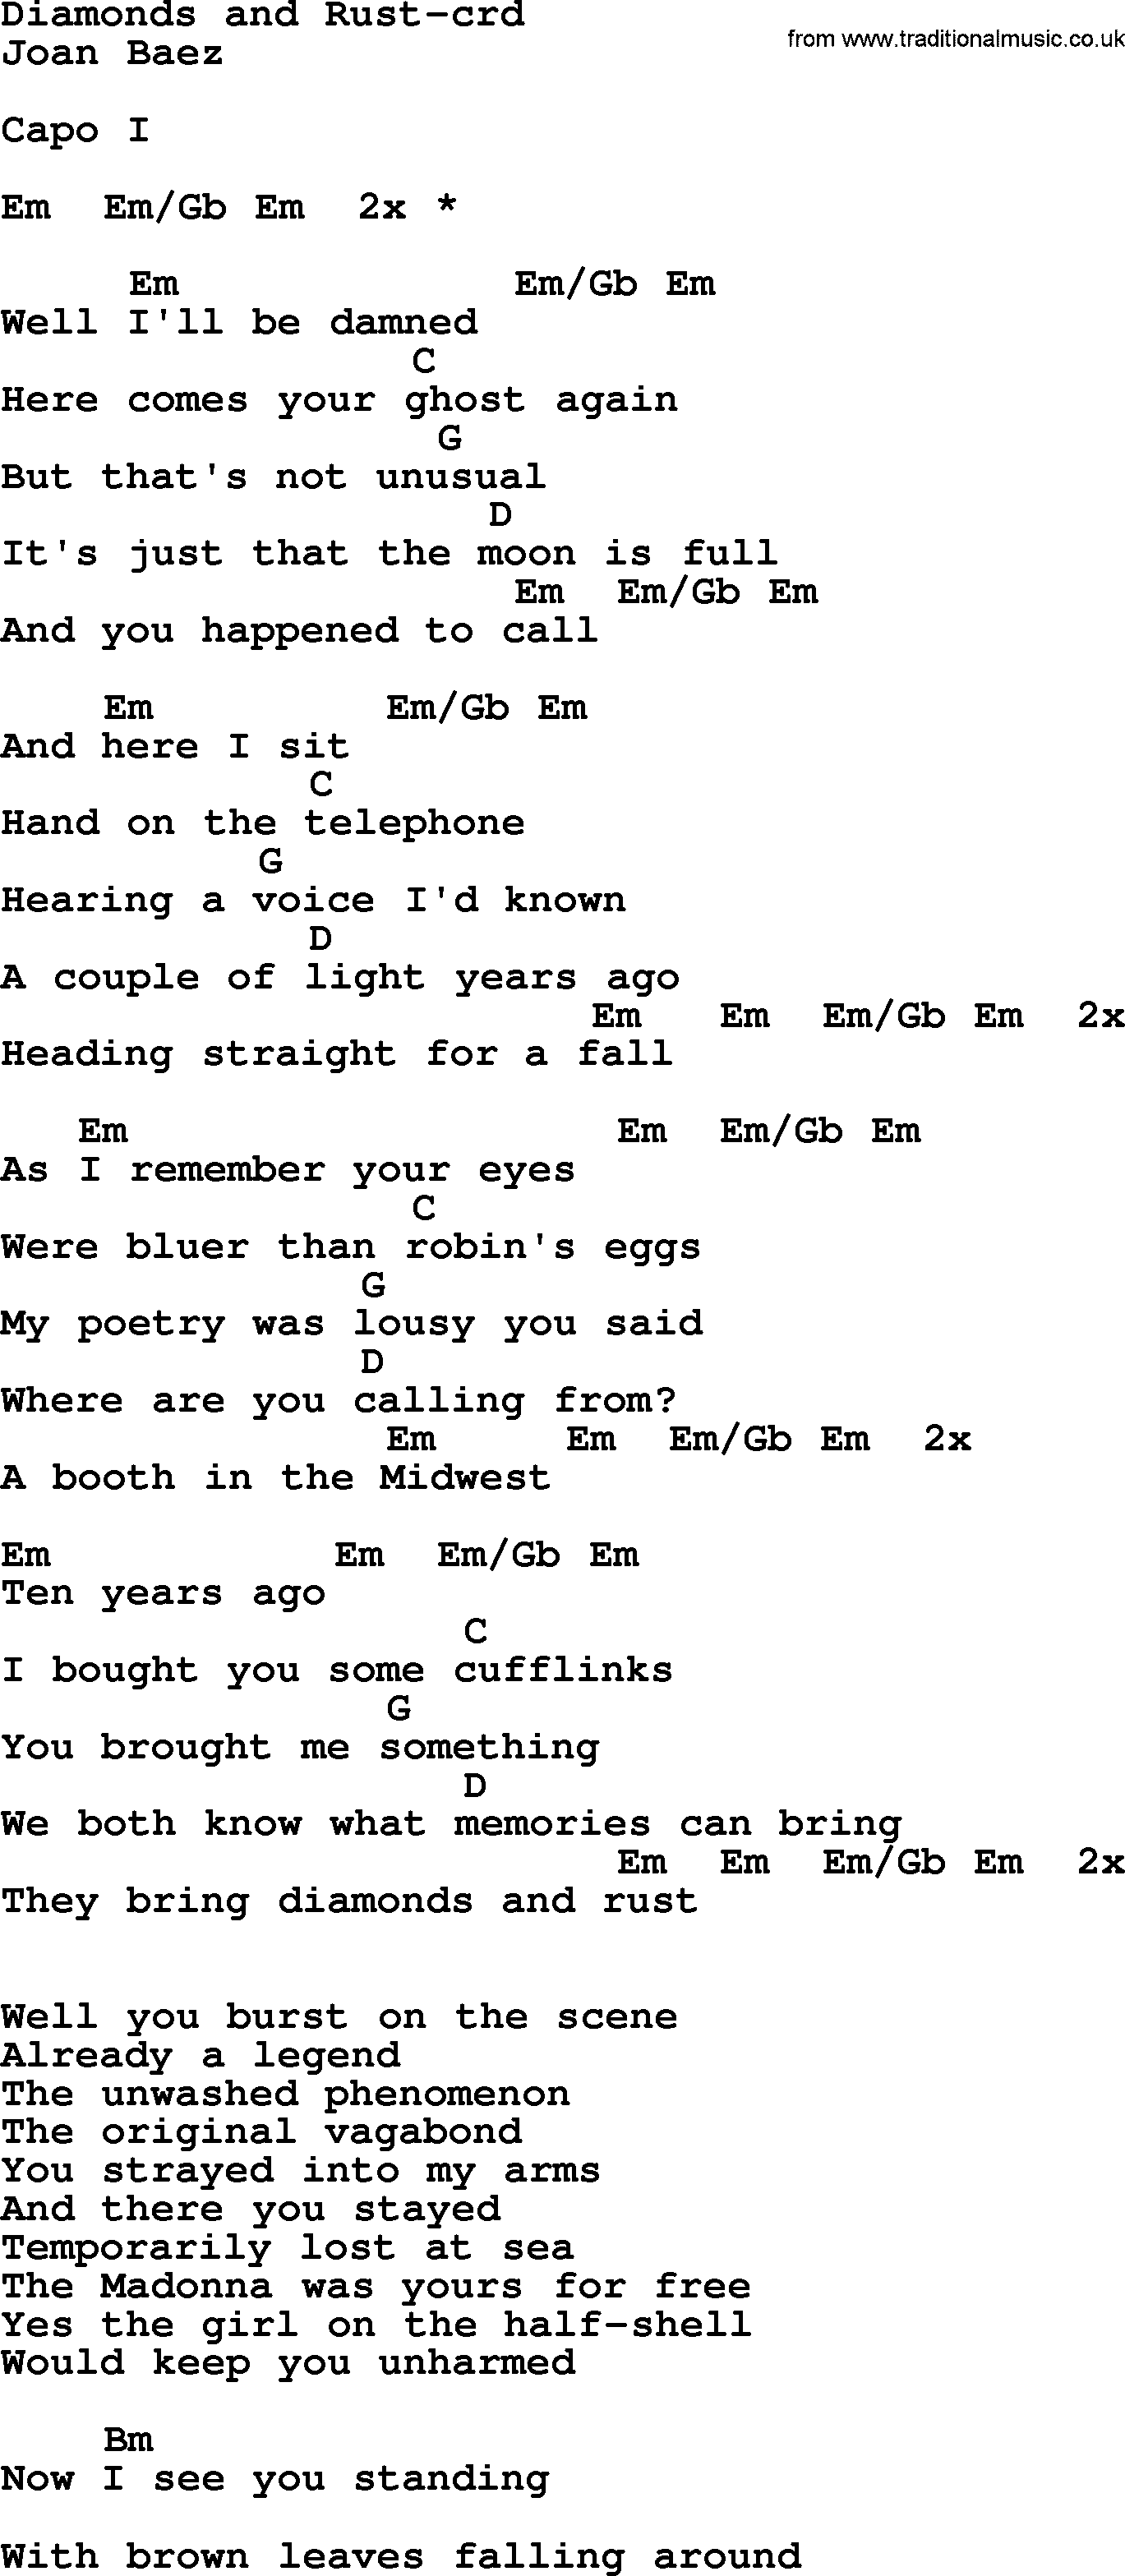 Joan Baez song - Diamonds And Rust, lyrics and chords